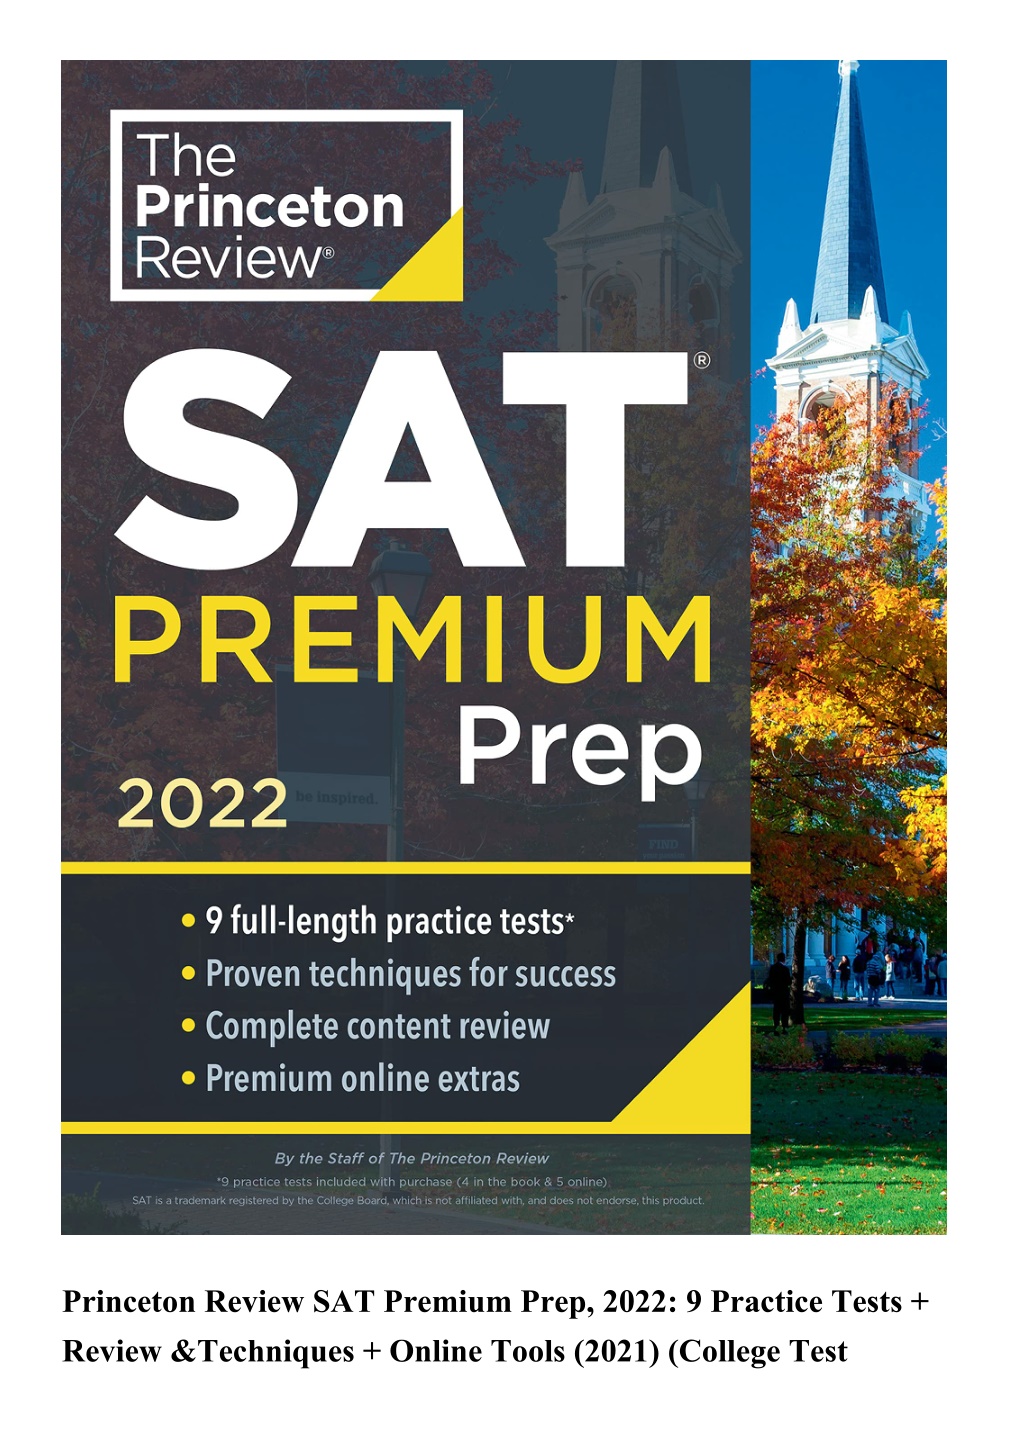 PPT READING Princeton Review SAT Premium Prep 2022 9 Practice Tests